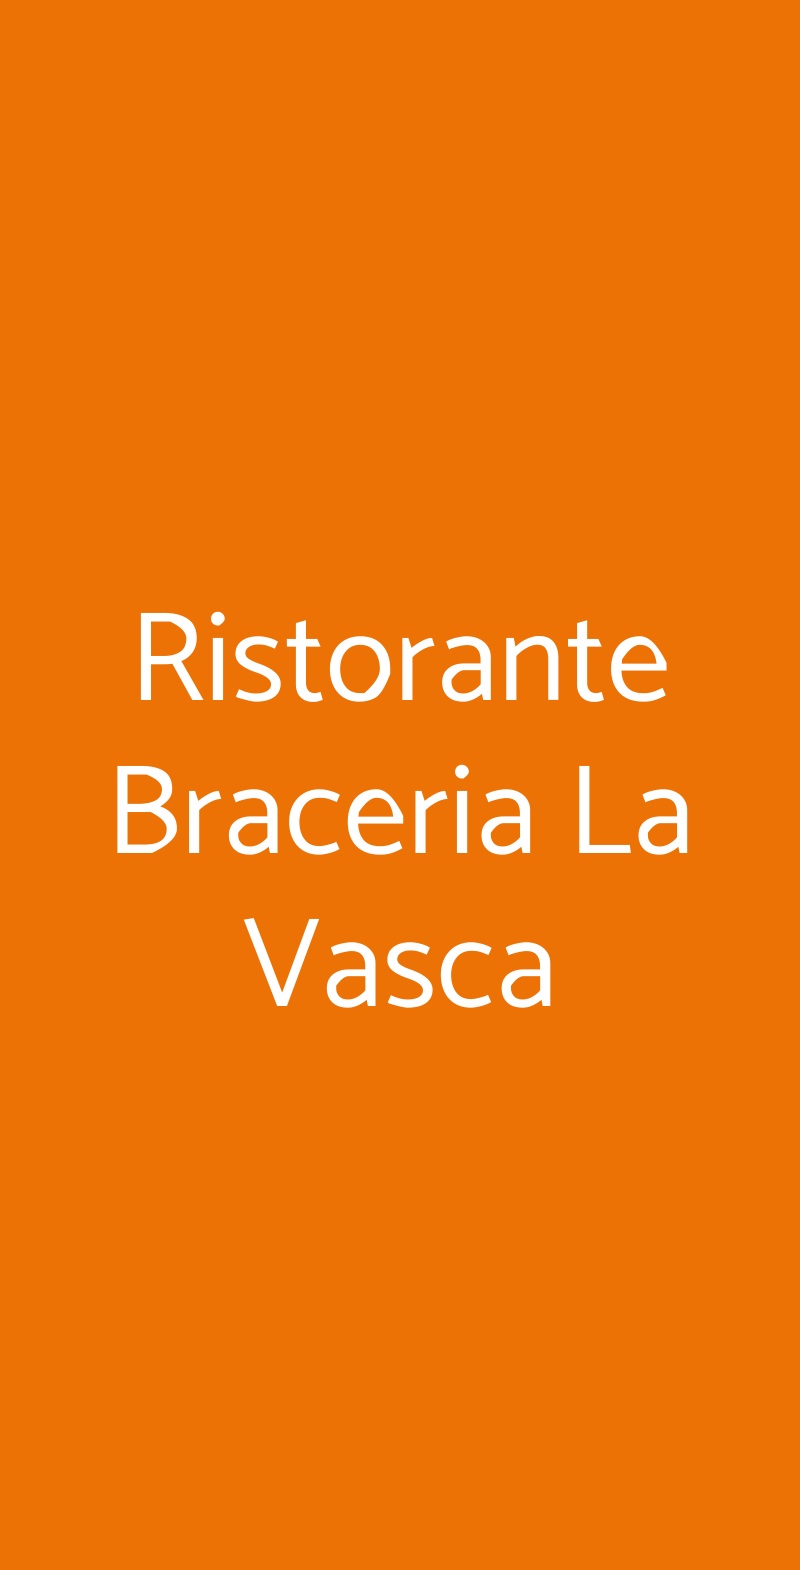 Ristorante Braceria La Vasca Montevarchi menù 1 pagina